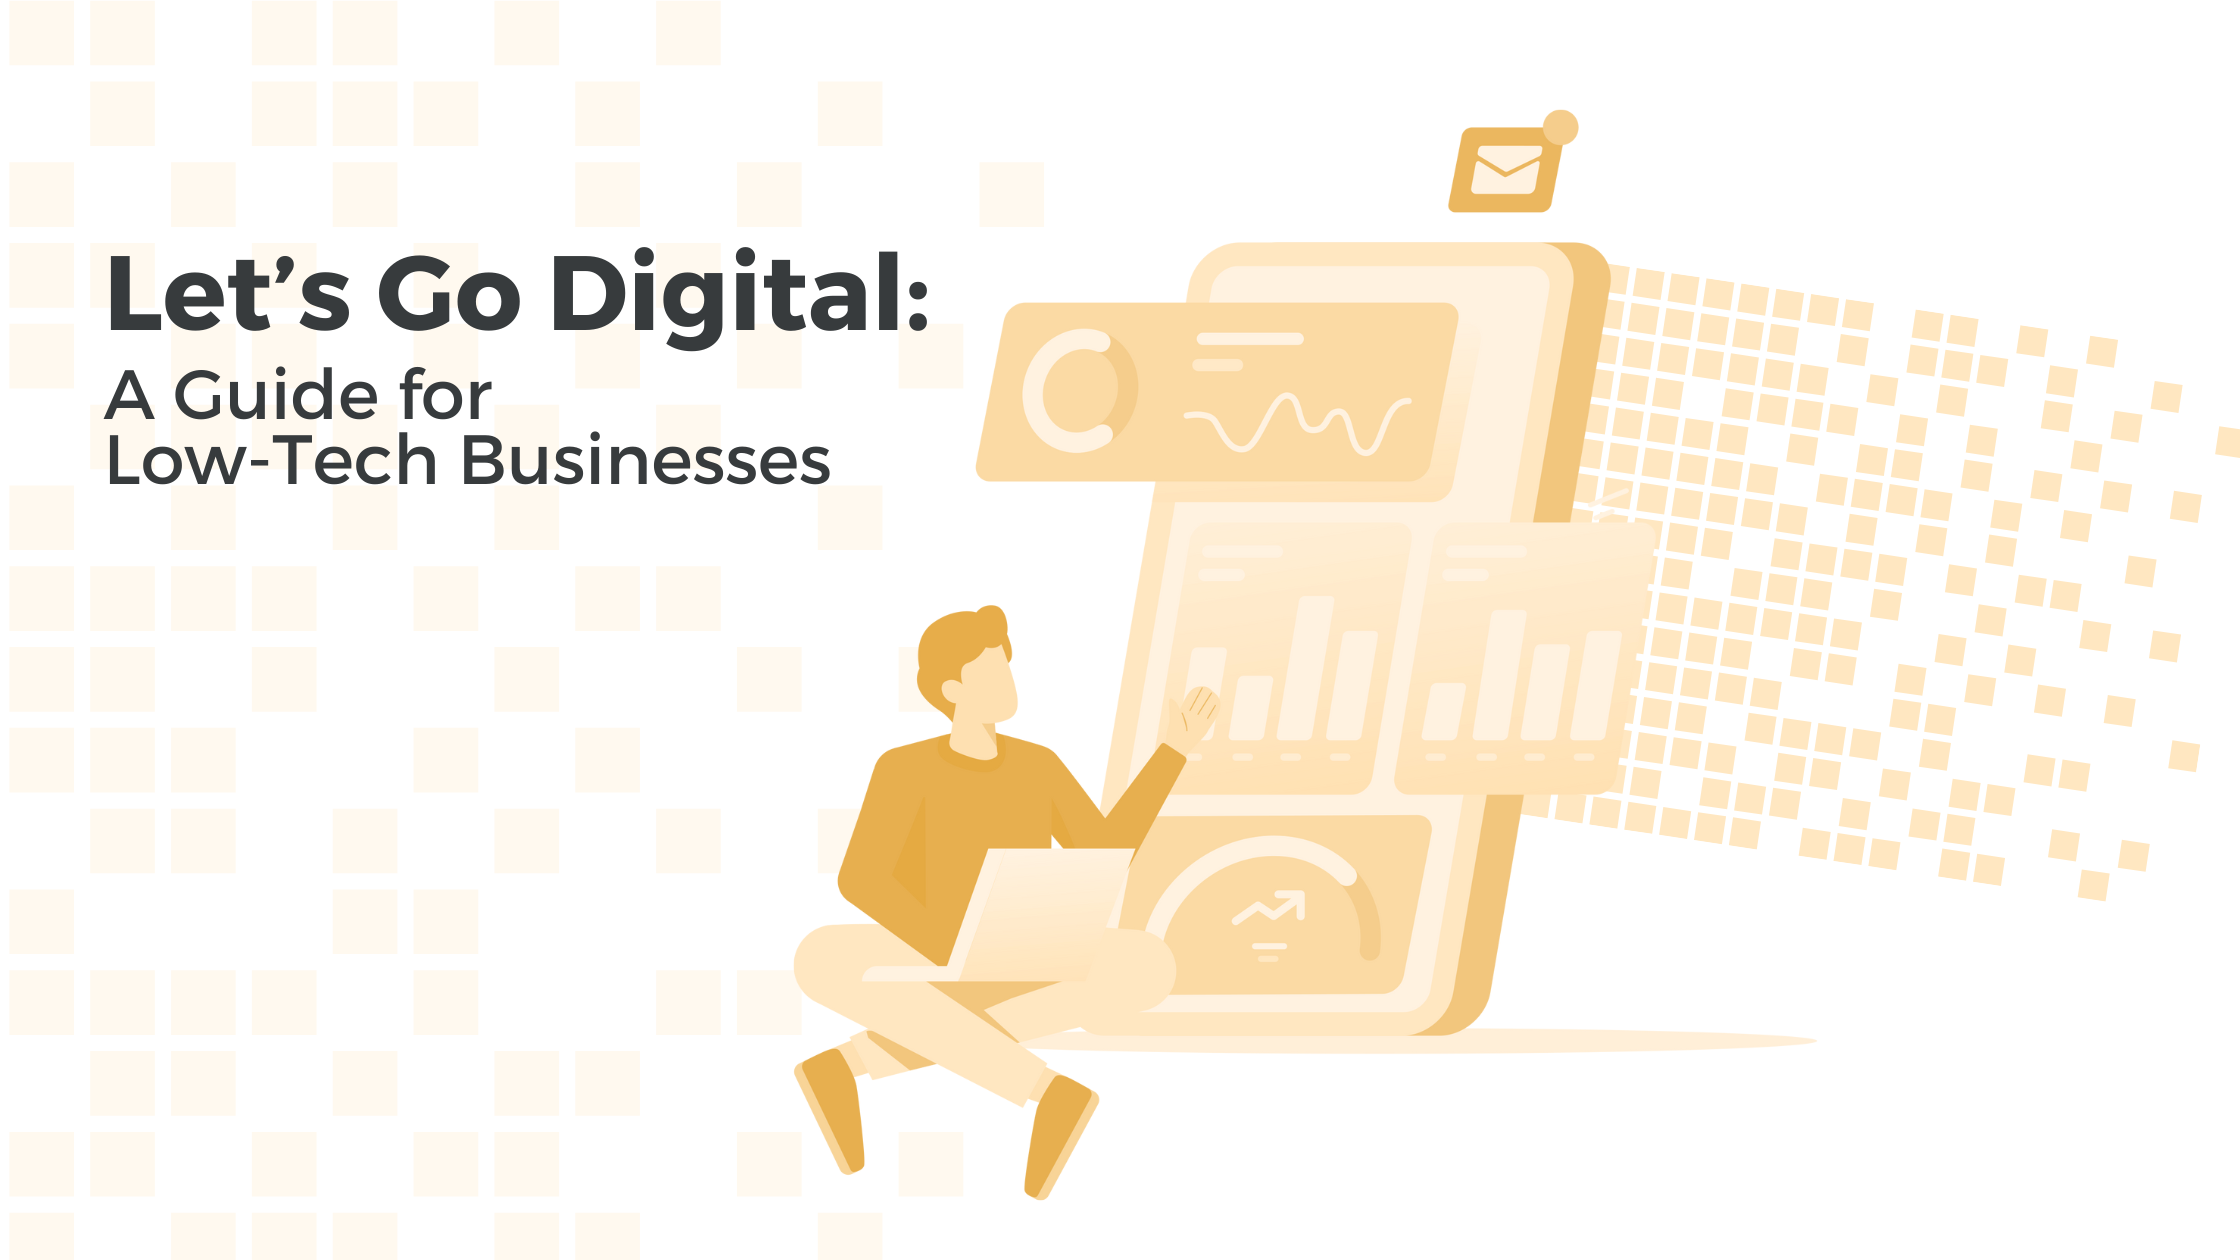 Let’s Go Digital: A Guide for Low-Tech Businesses